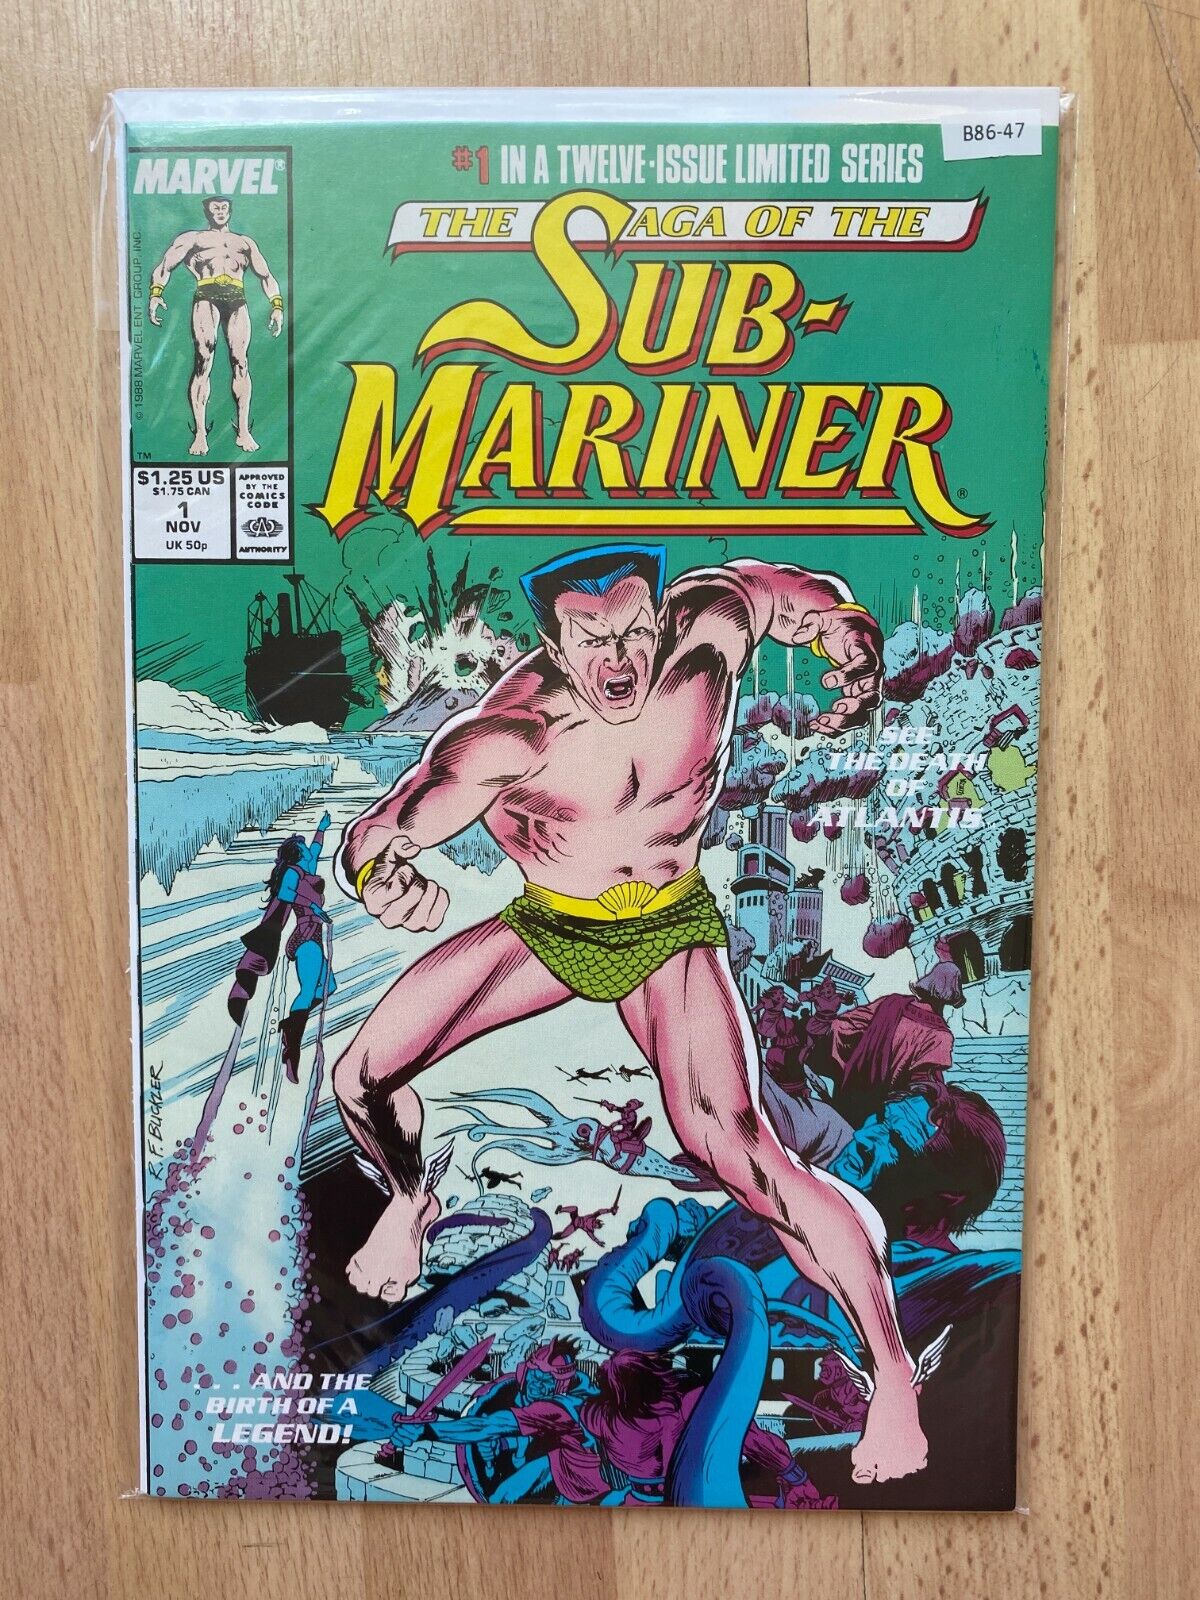 Sub-Mariner 1 - High Grade Comic Book - B86-47